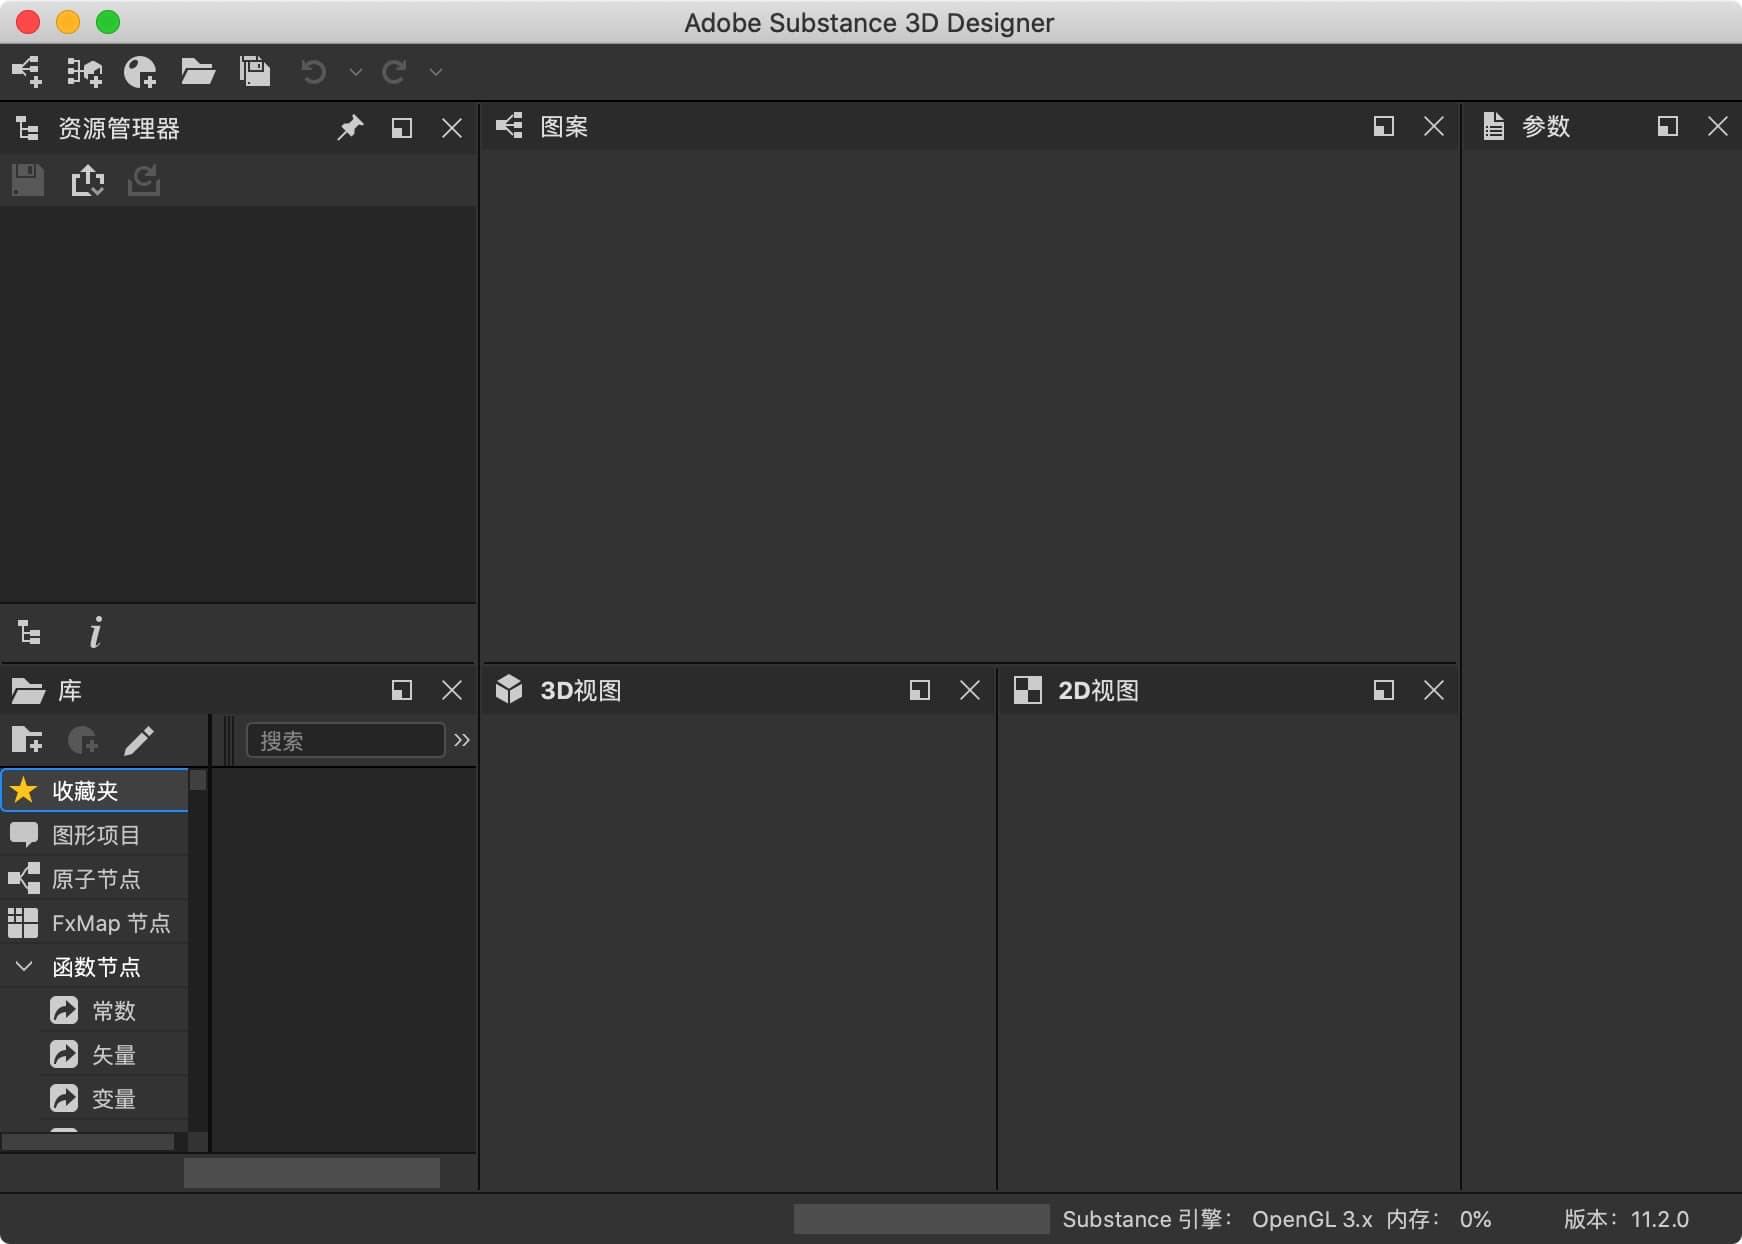 Adobe Substance 3D Designer 12.1.1 for mac 3d资源创作